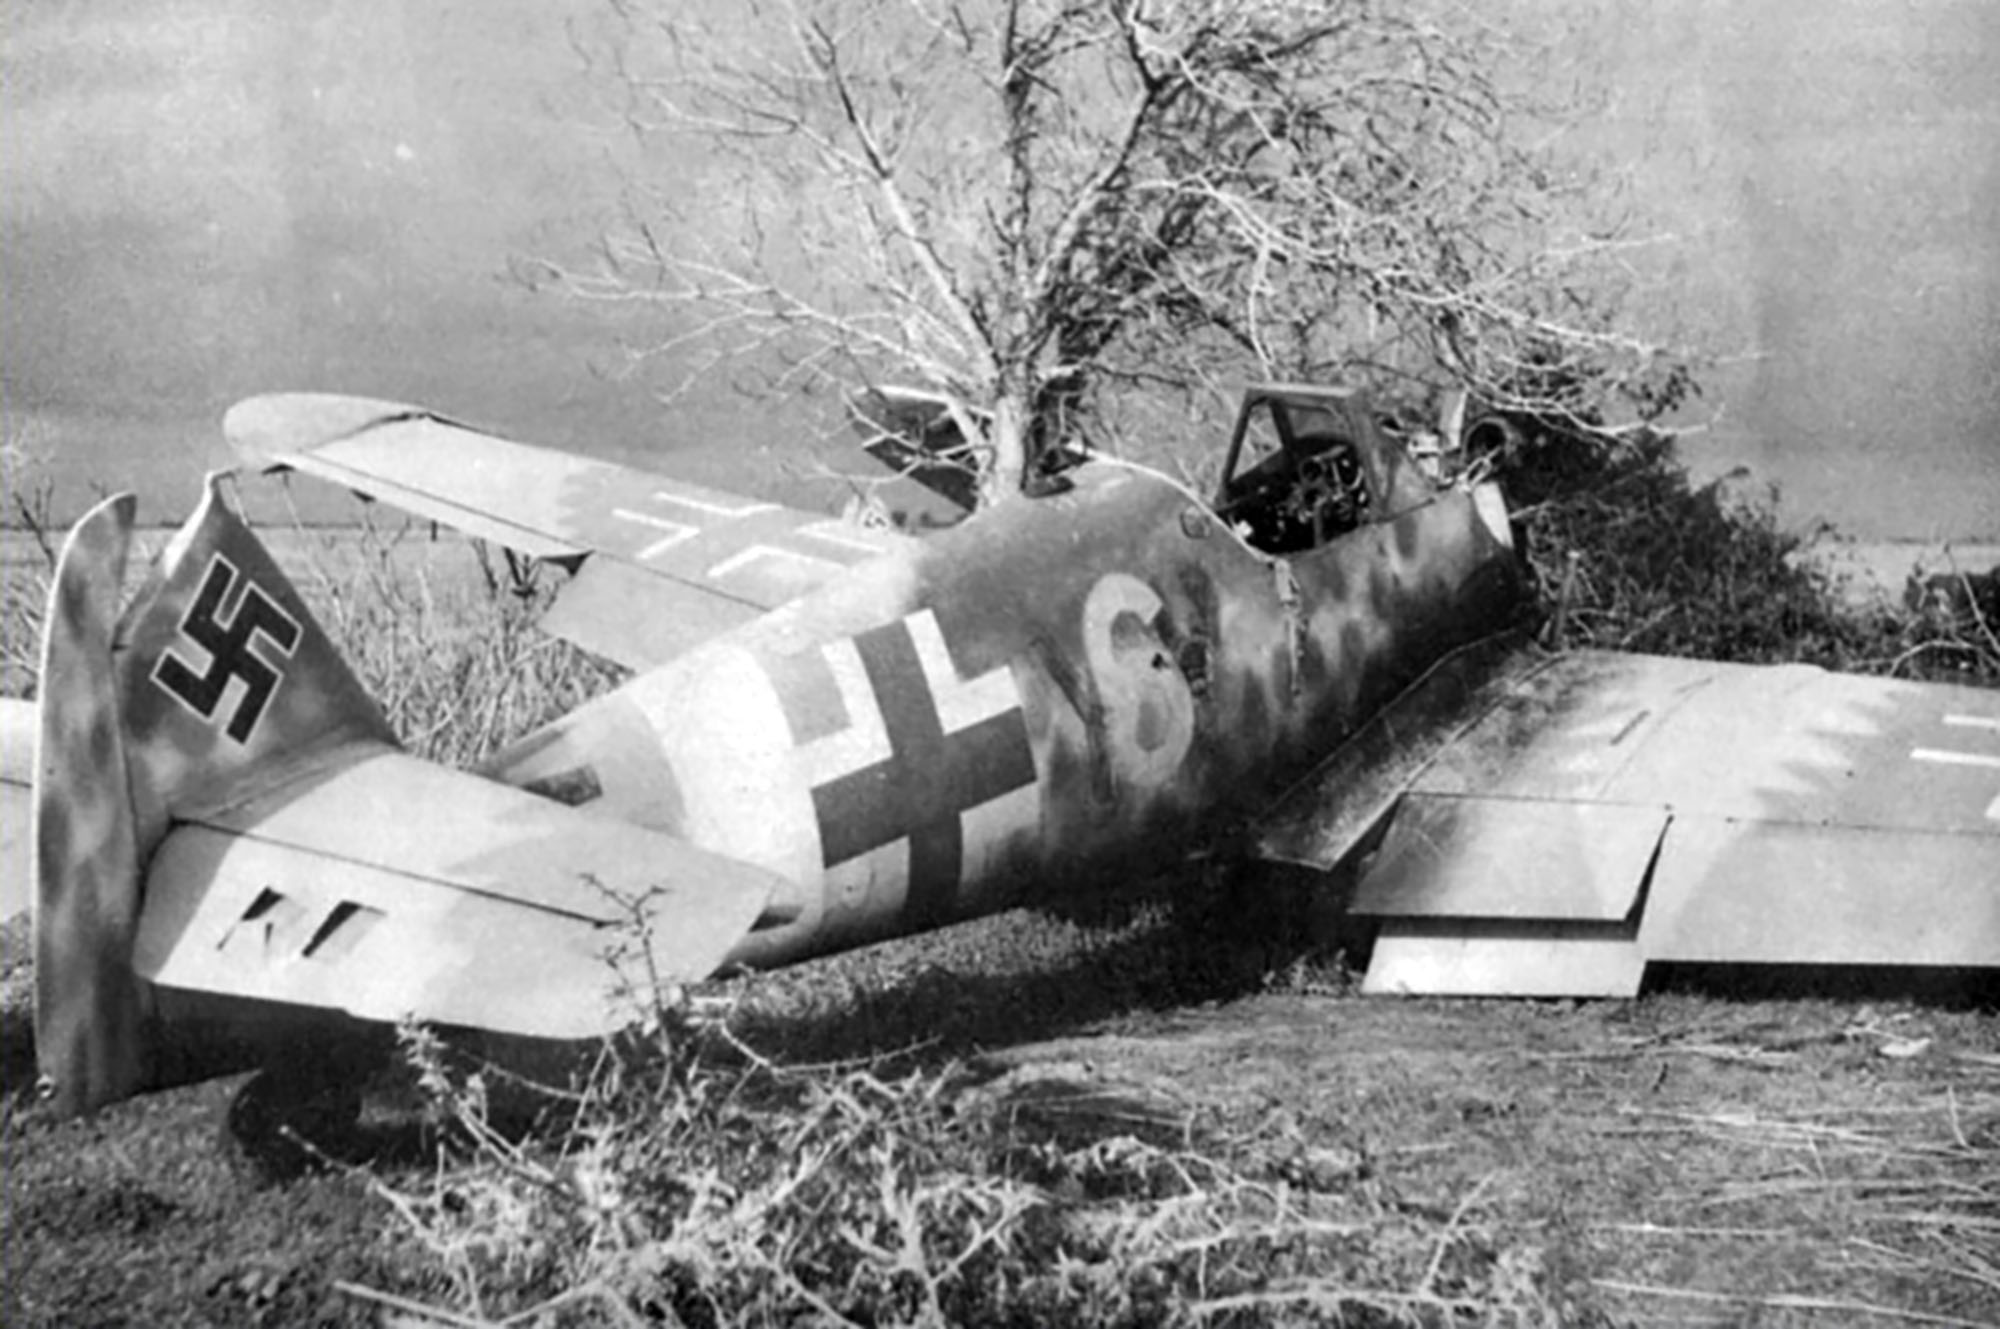 Messerschmitt Bf 109G6 3.JG53 Yellow 6 Stkz TI+YY WNr 26037 force landed San Lorenzo 17th Sep 1943 01